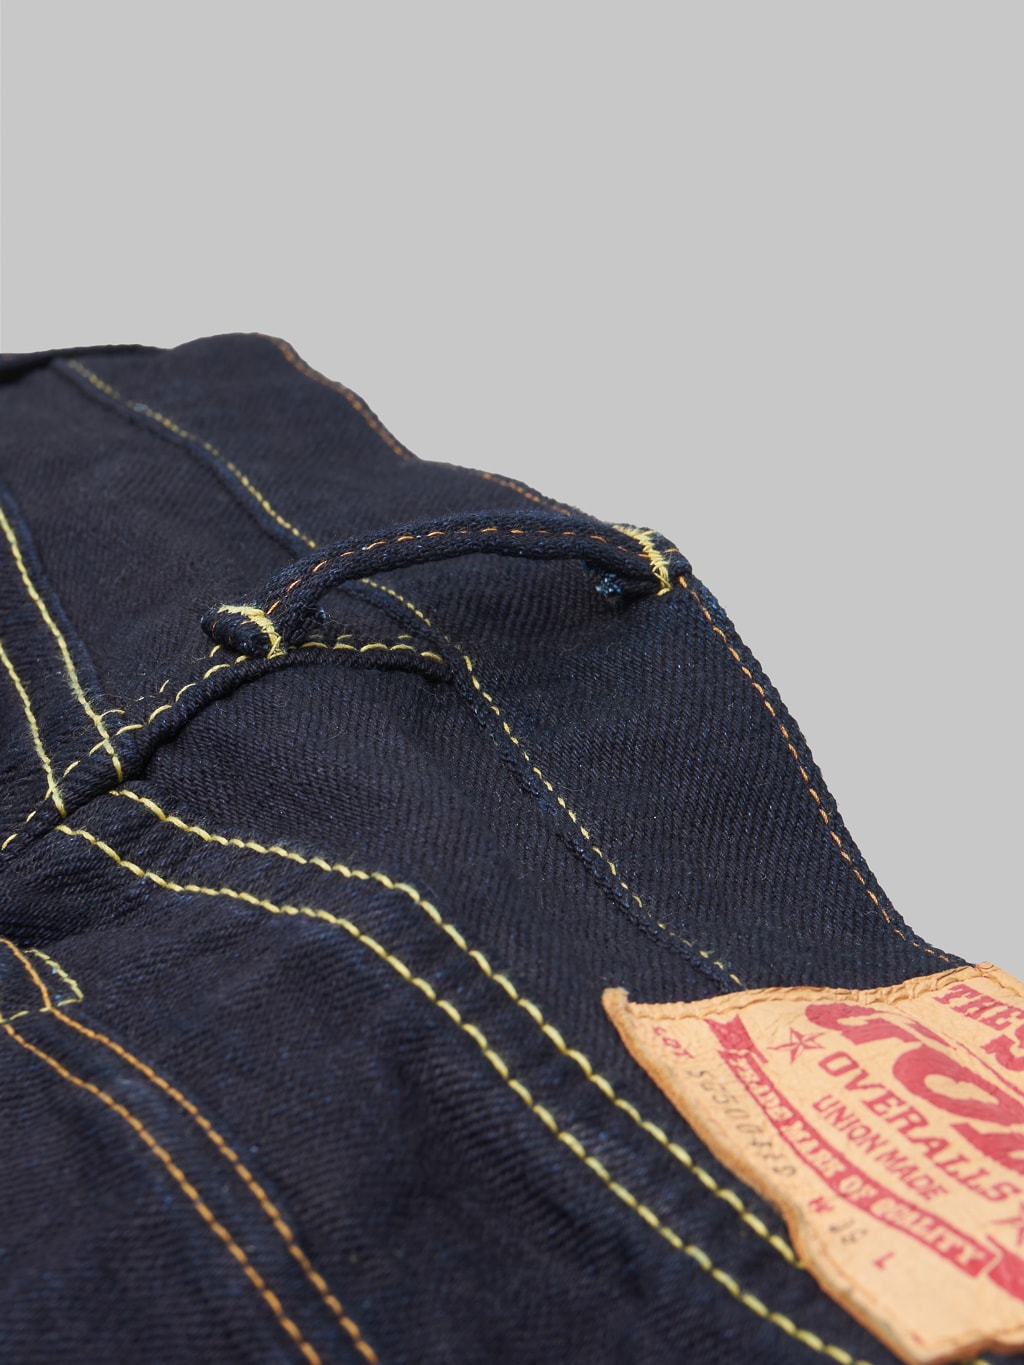 The Strike Gold 5004ID double indigo selvedge jeans belt loop